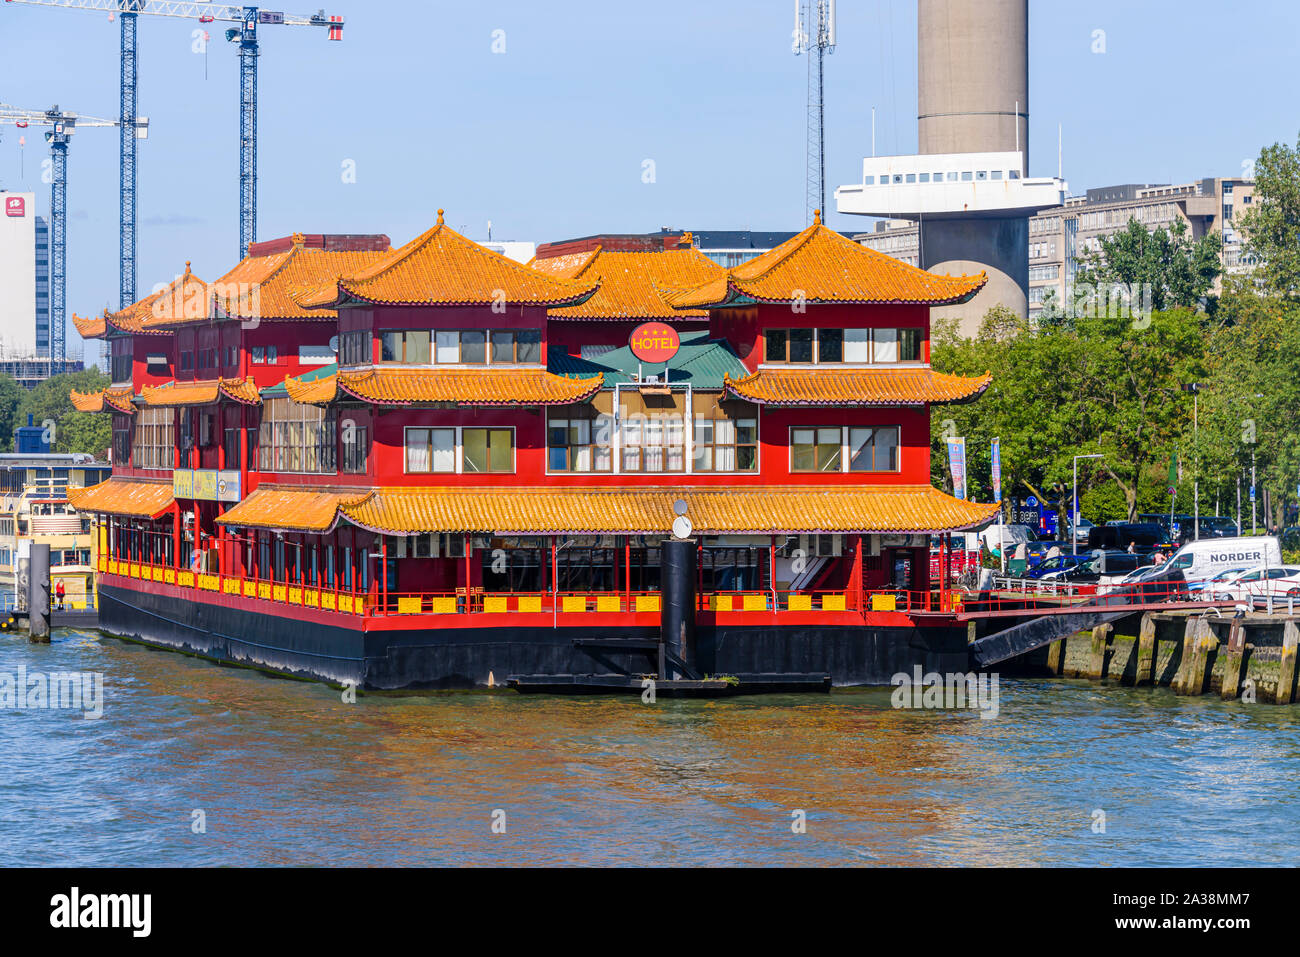 New Ocean Paradise floating Chinese restaurant, Rotterdam, Photo - Alamy